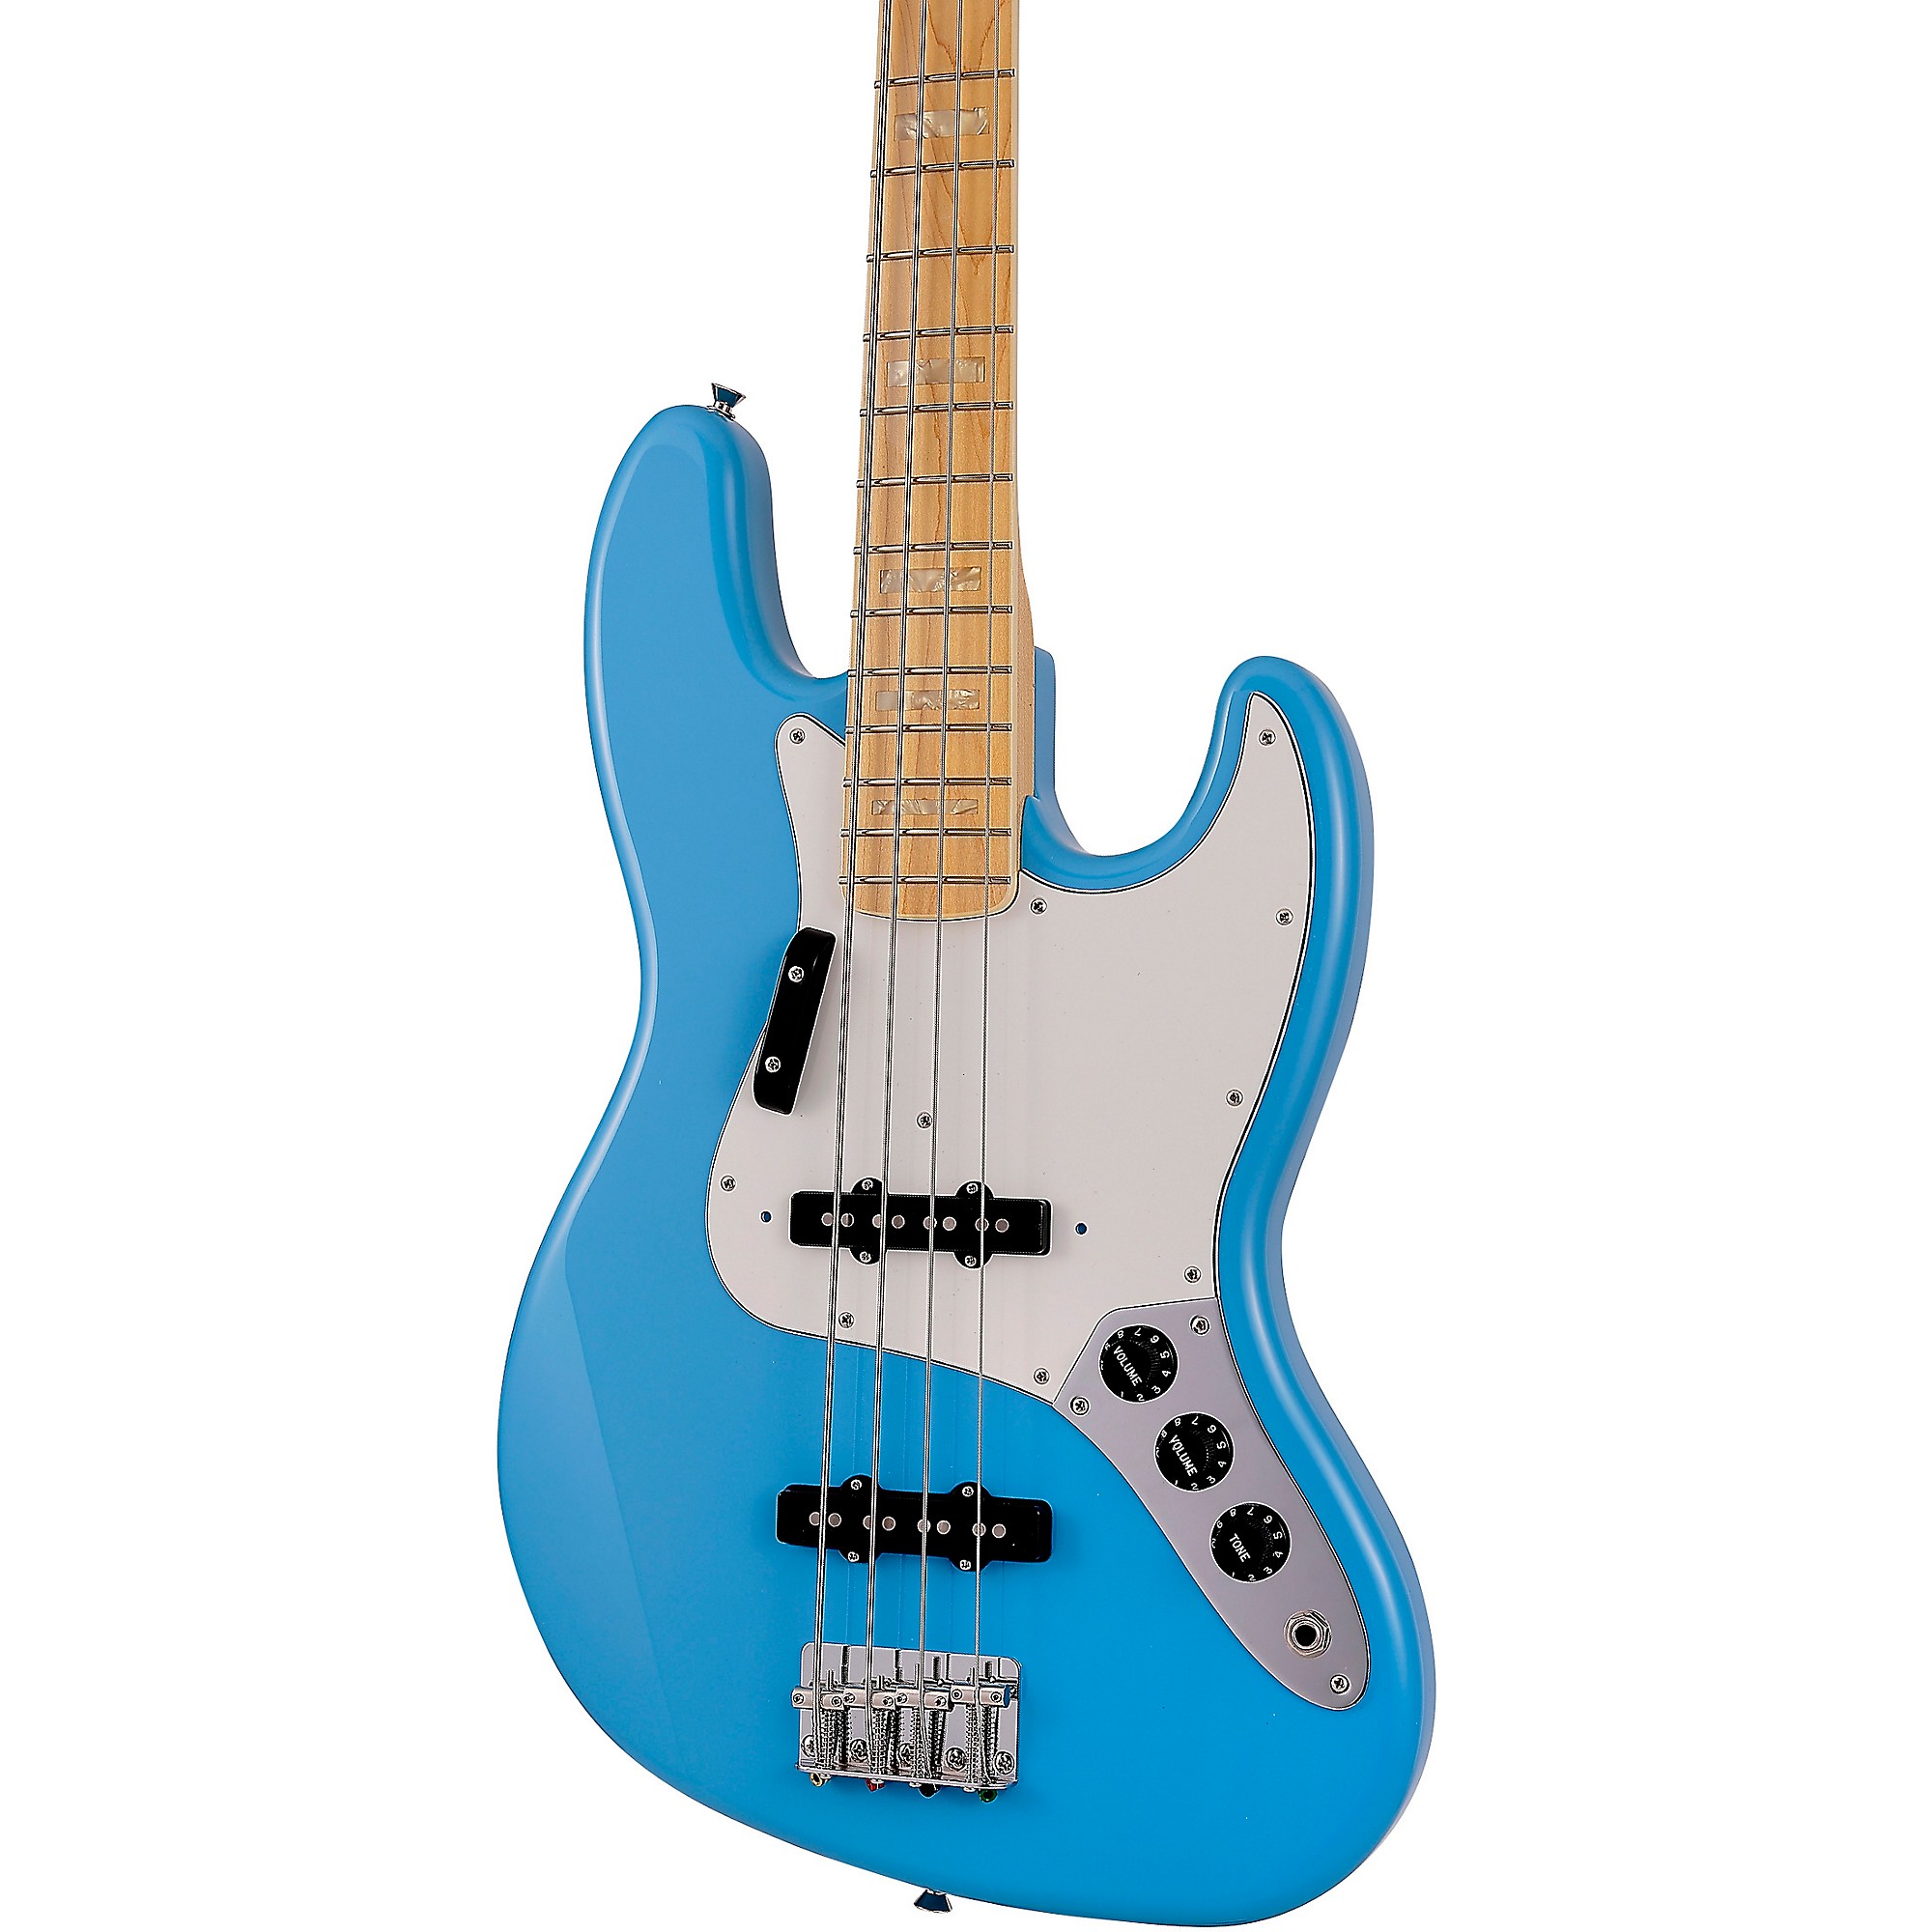 Fender Made in Japan Limited International Color Jazz Bass Maui 